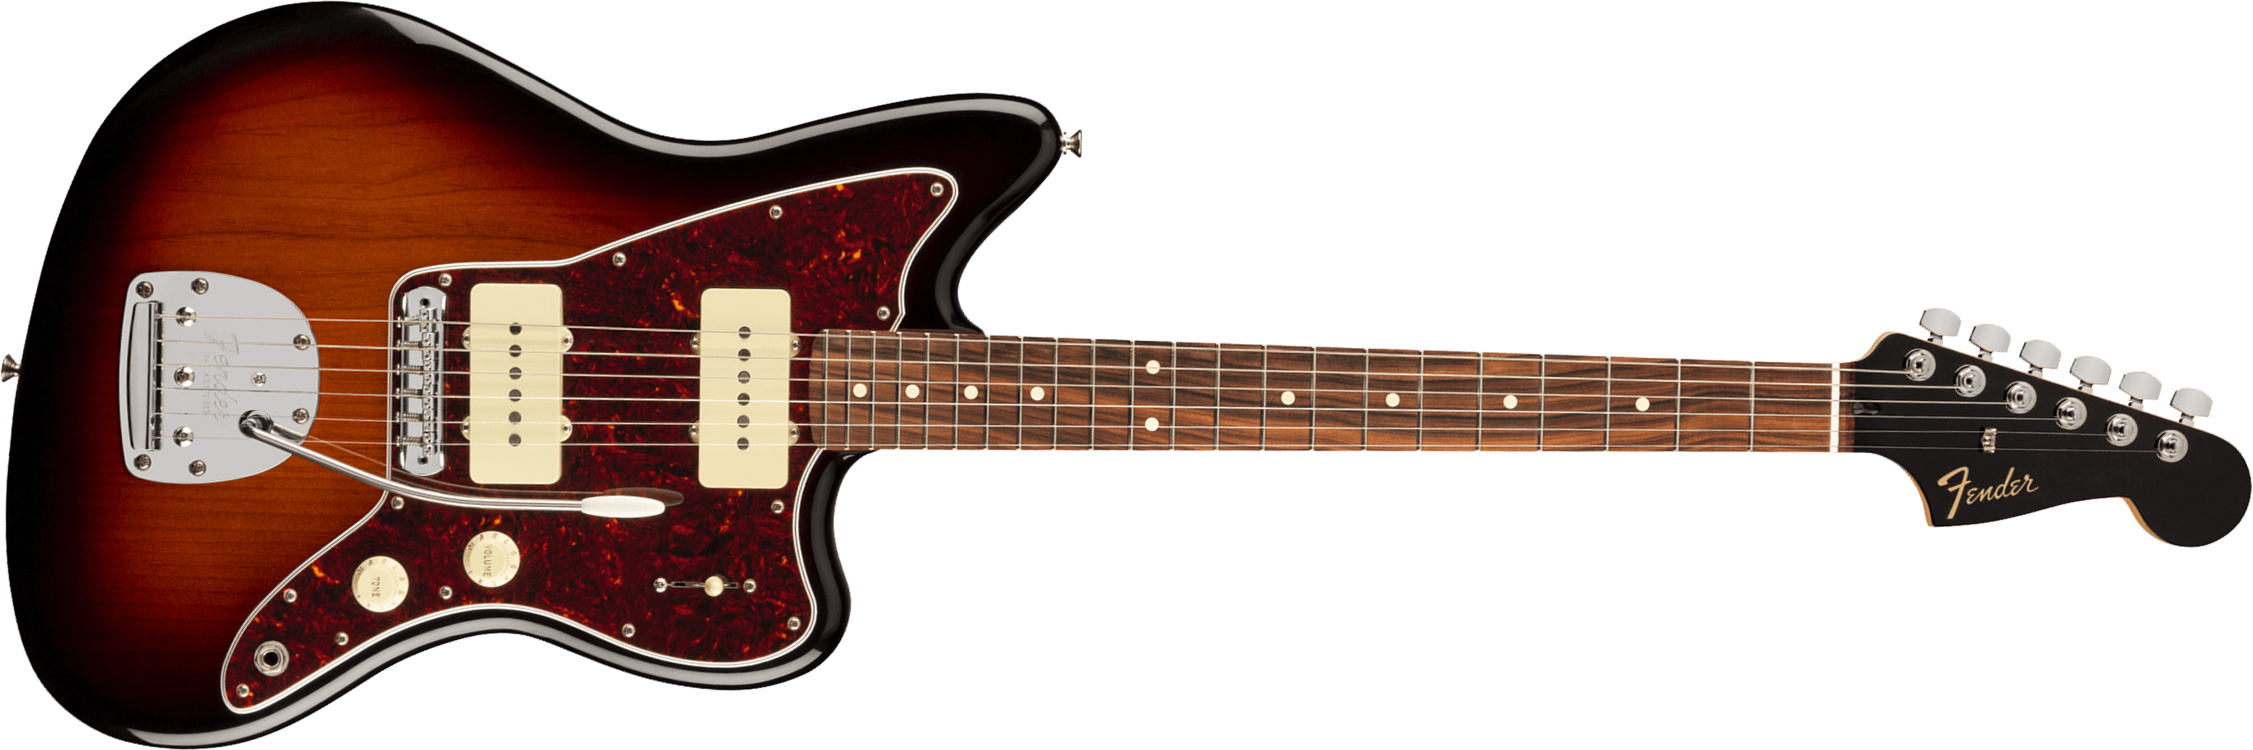 Fender Jazzmaster Player Ltd 2s Trem Pf - 3-color Sunburst - Retro rock electric guitar - Main picture